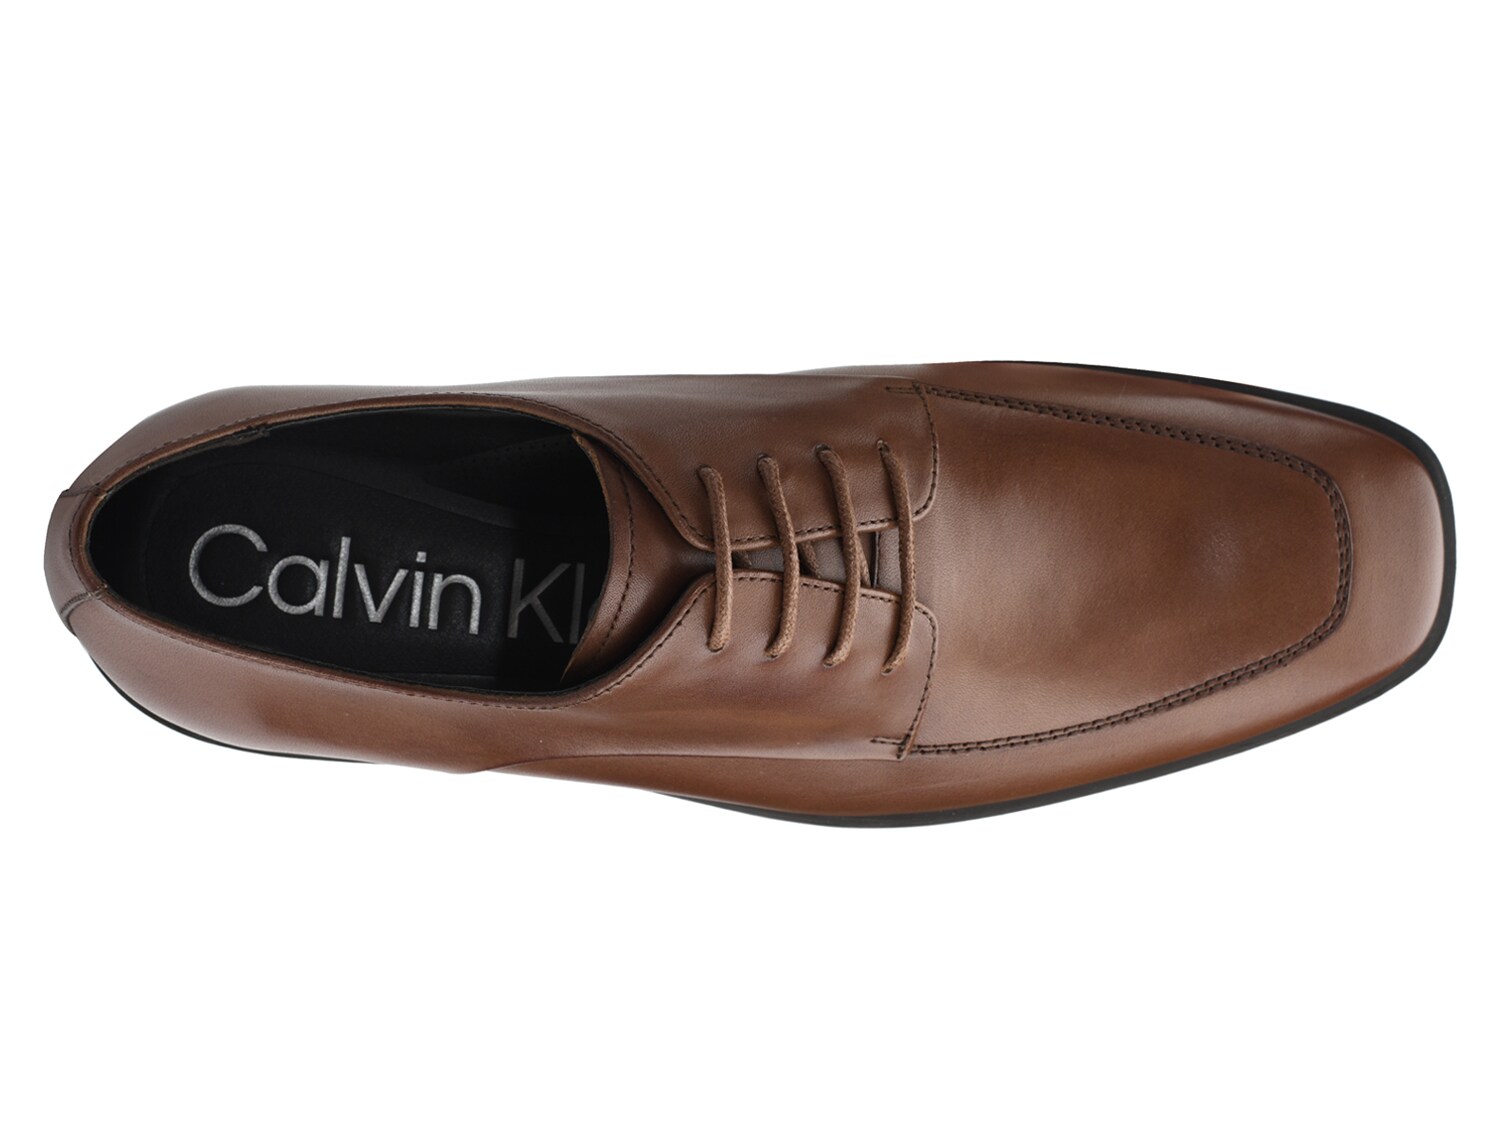 calvin klein dress shoes